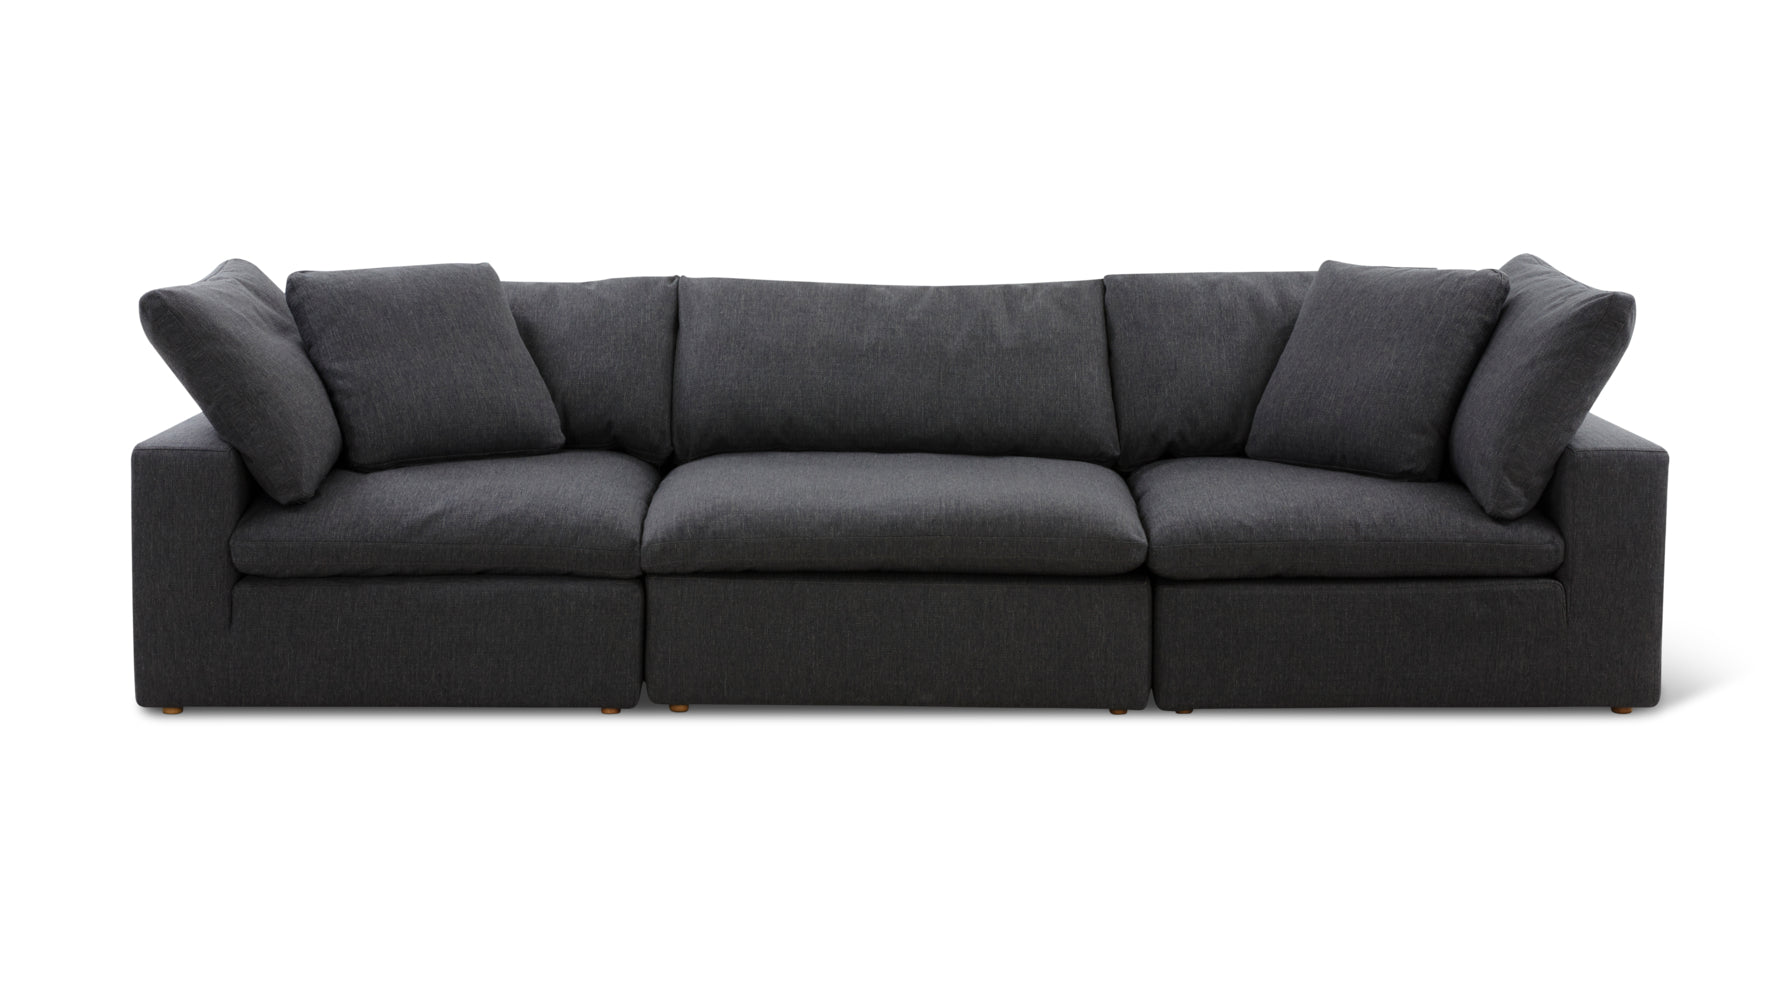 Movie Night™ 3-Piece Modular Sofa, Standard, Dark Shadow - Image 1